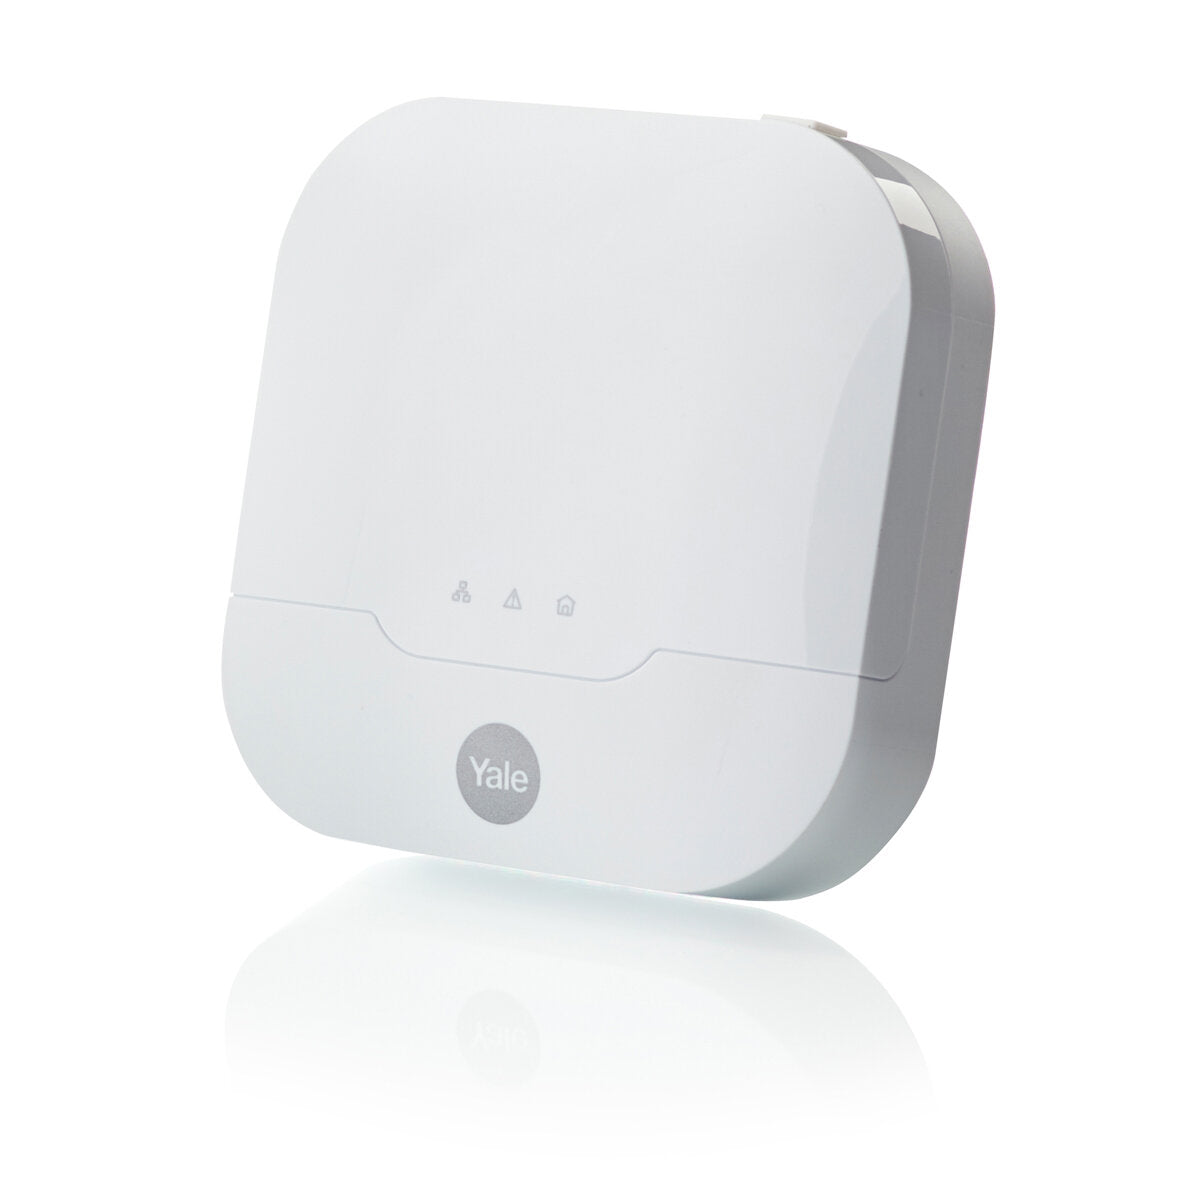 Yale IA-330 15pc Sync Smart Home Alarm with x4 Motion Sensors and x4 Window/Door Sensors